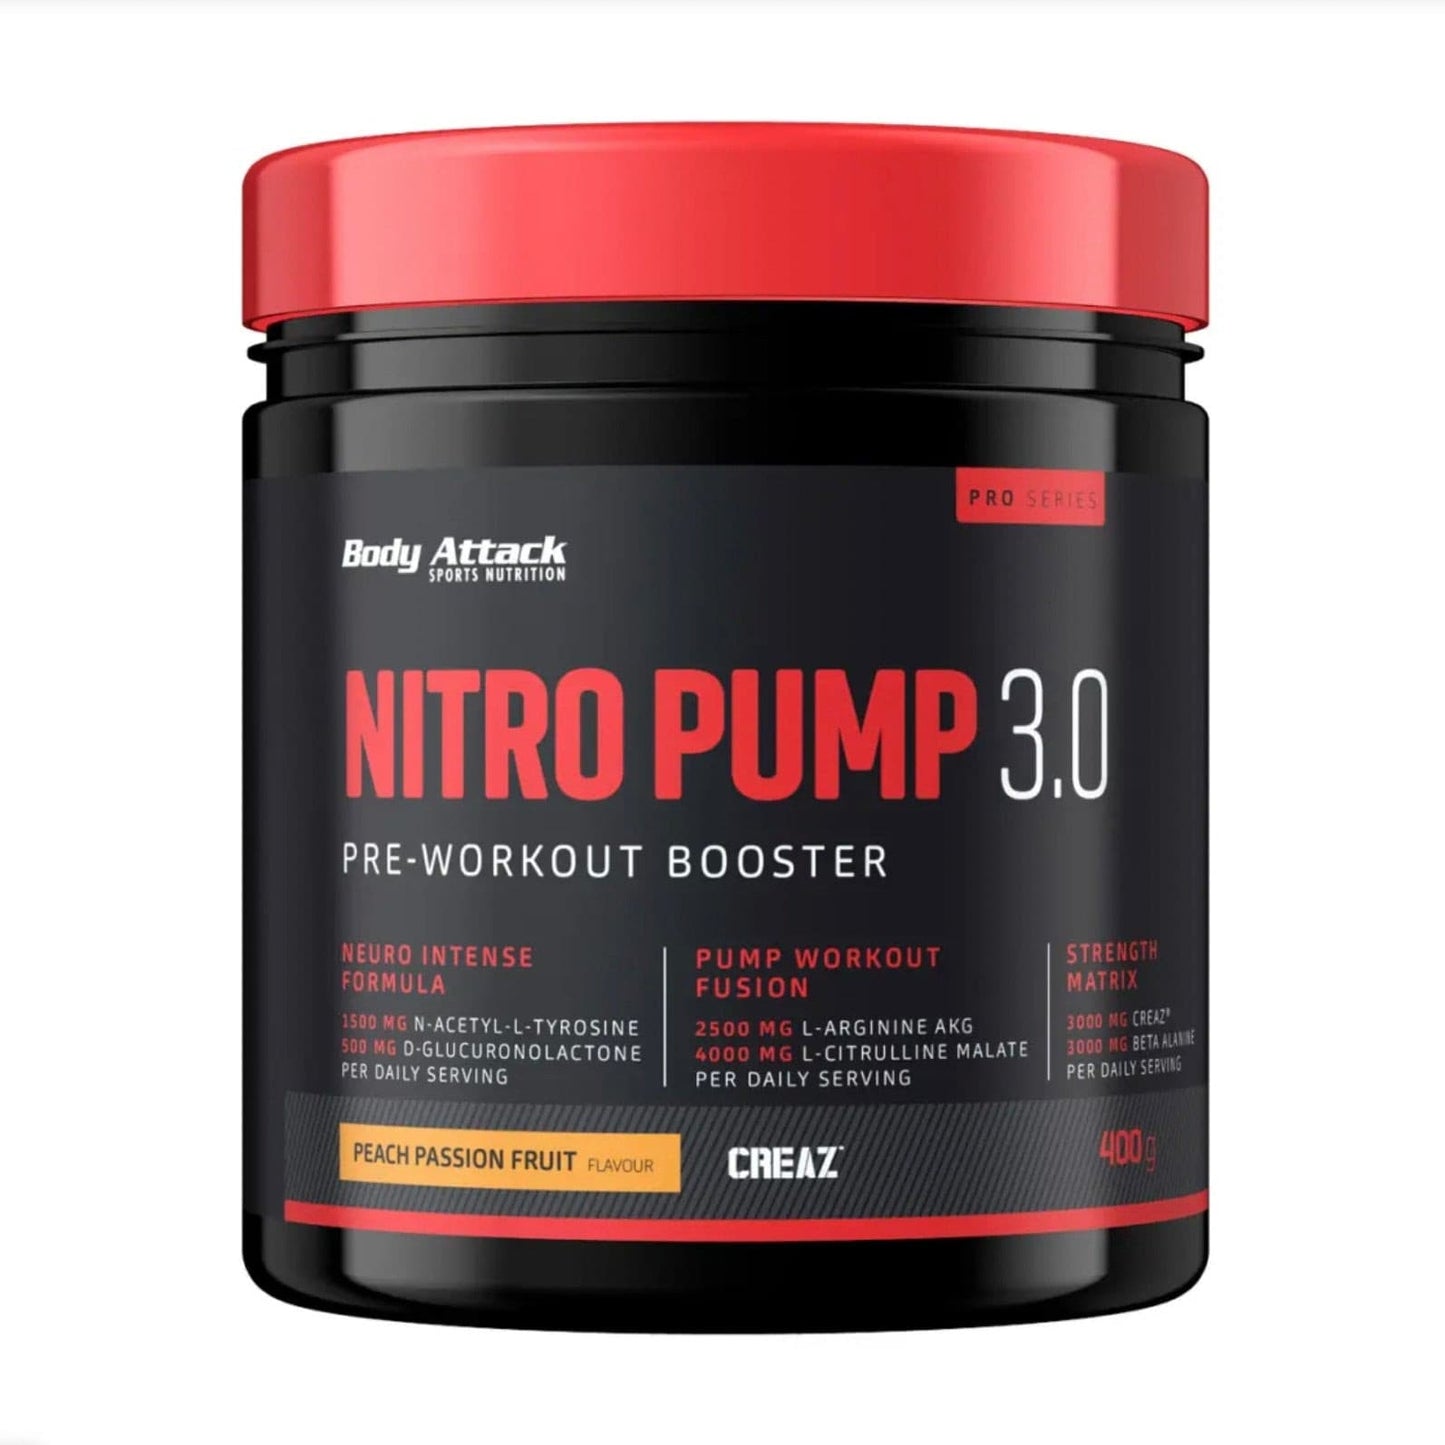 Body Attack Nitro Pump 3.0 Pre Workout Booster - 400g